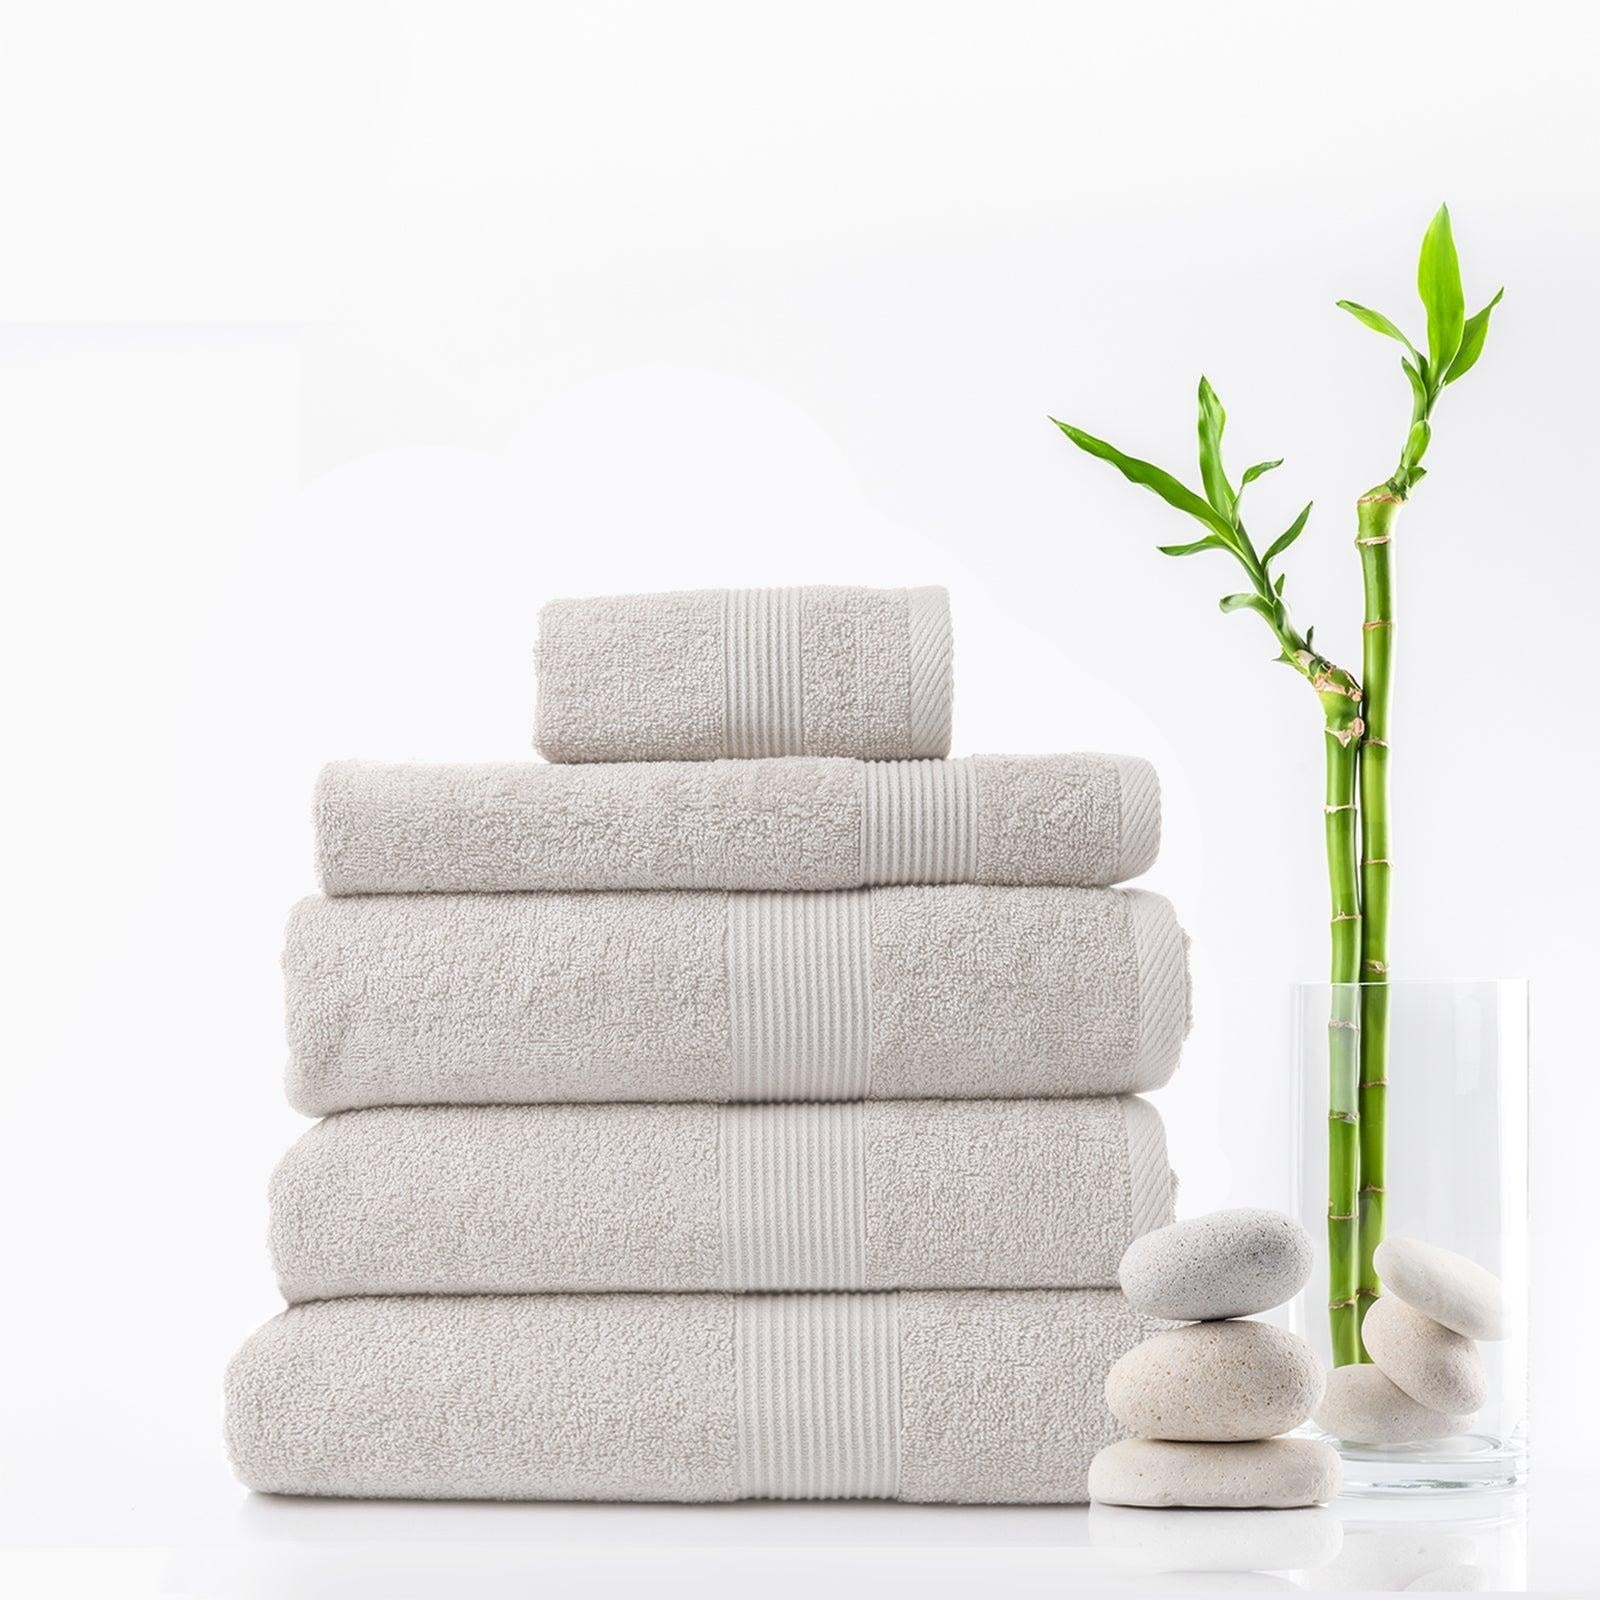 Royal Comfort 5 Piece Cotton Bamboo Towel Set 450GSM Luxurious Absorbent Plush Sea Holly Deals499